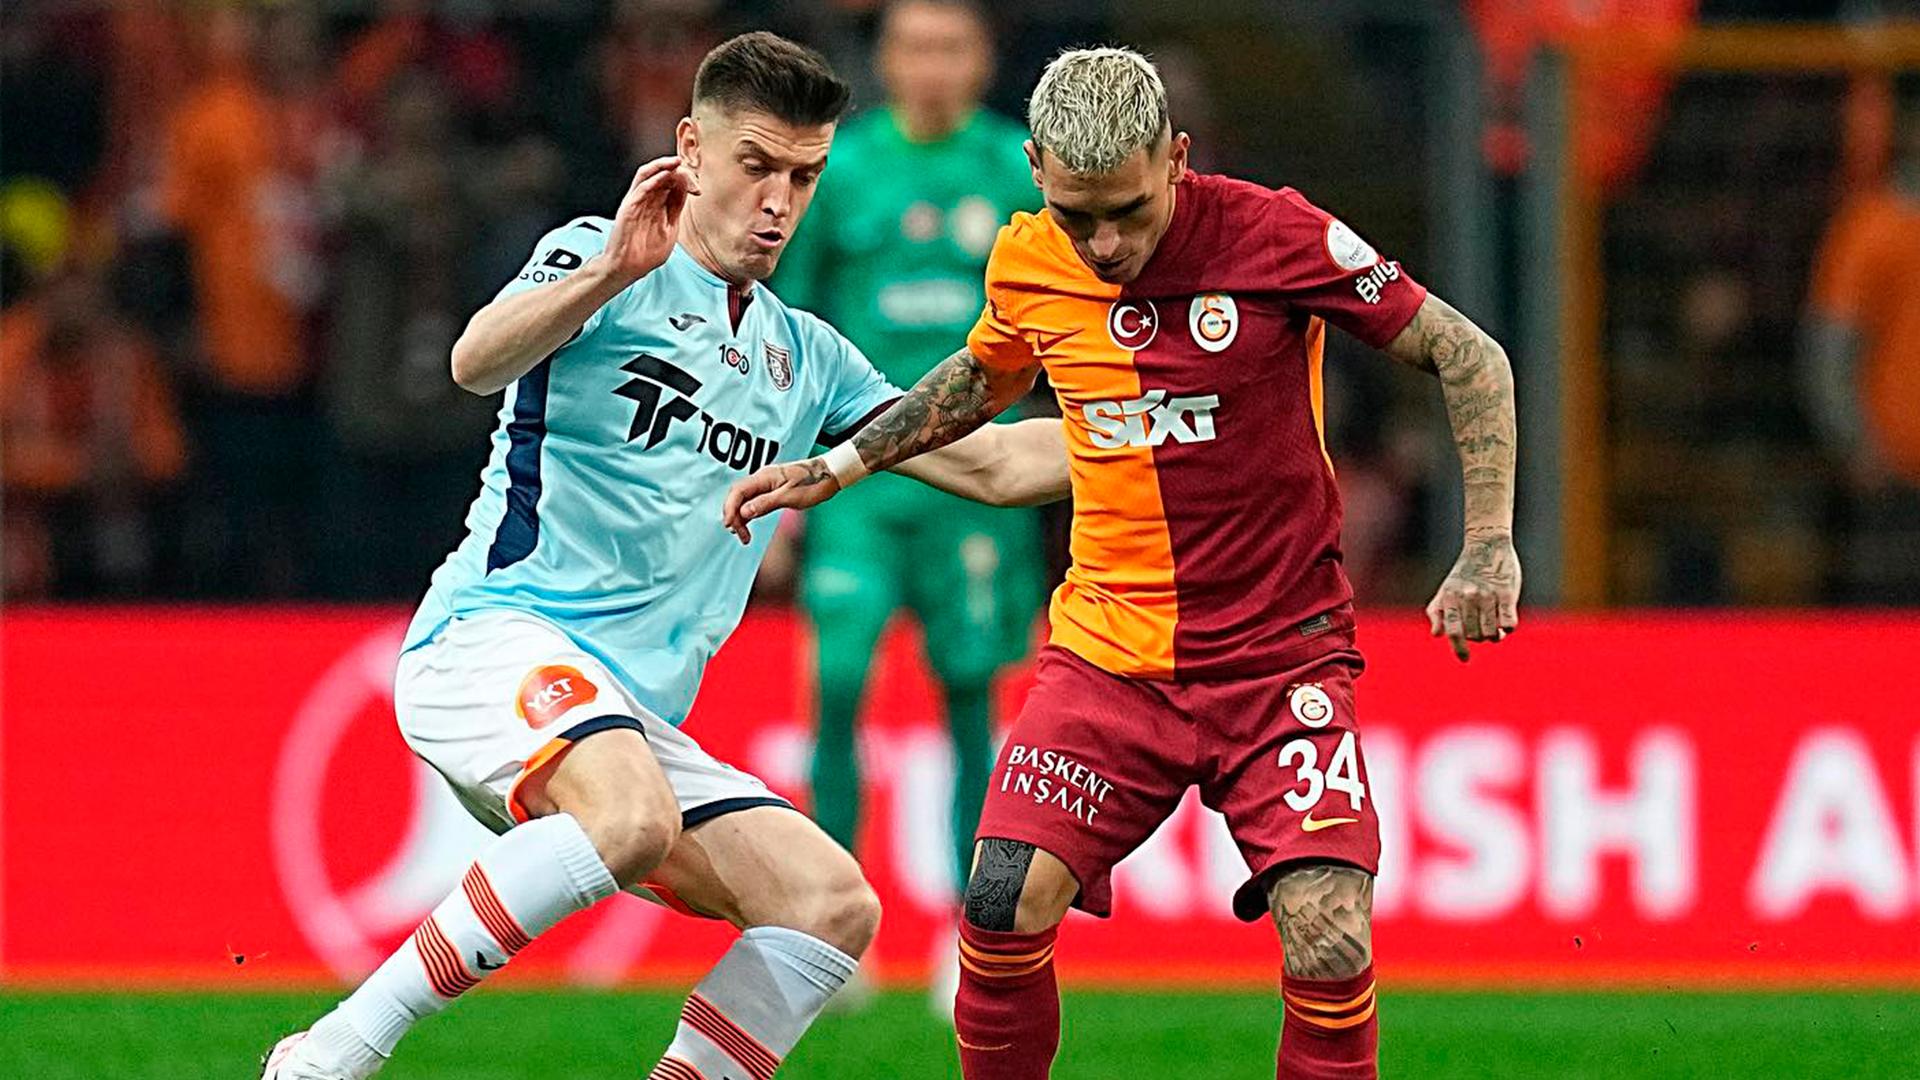 VIDEO | Super Ligue Highlights: Galatasaray vs Basaksehir